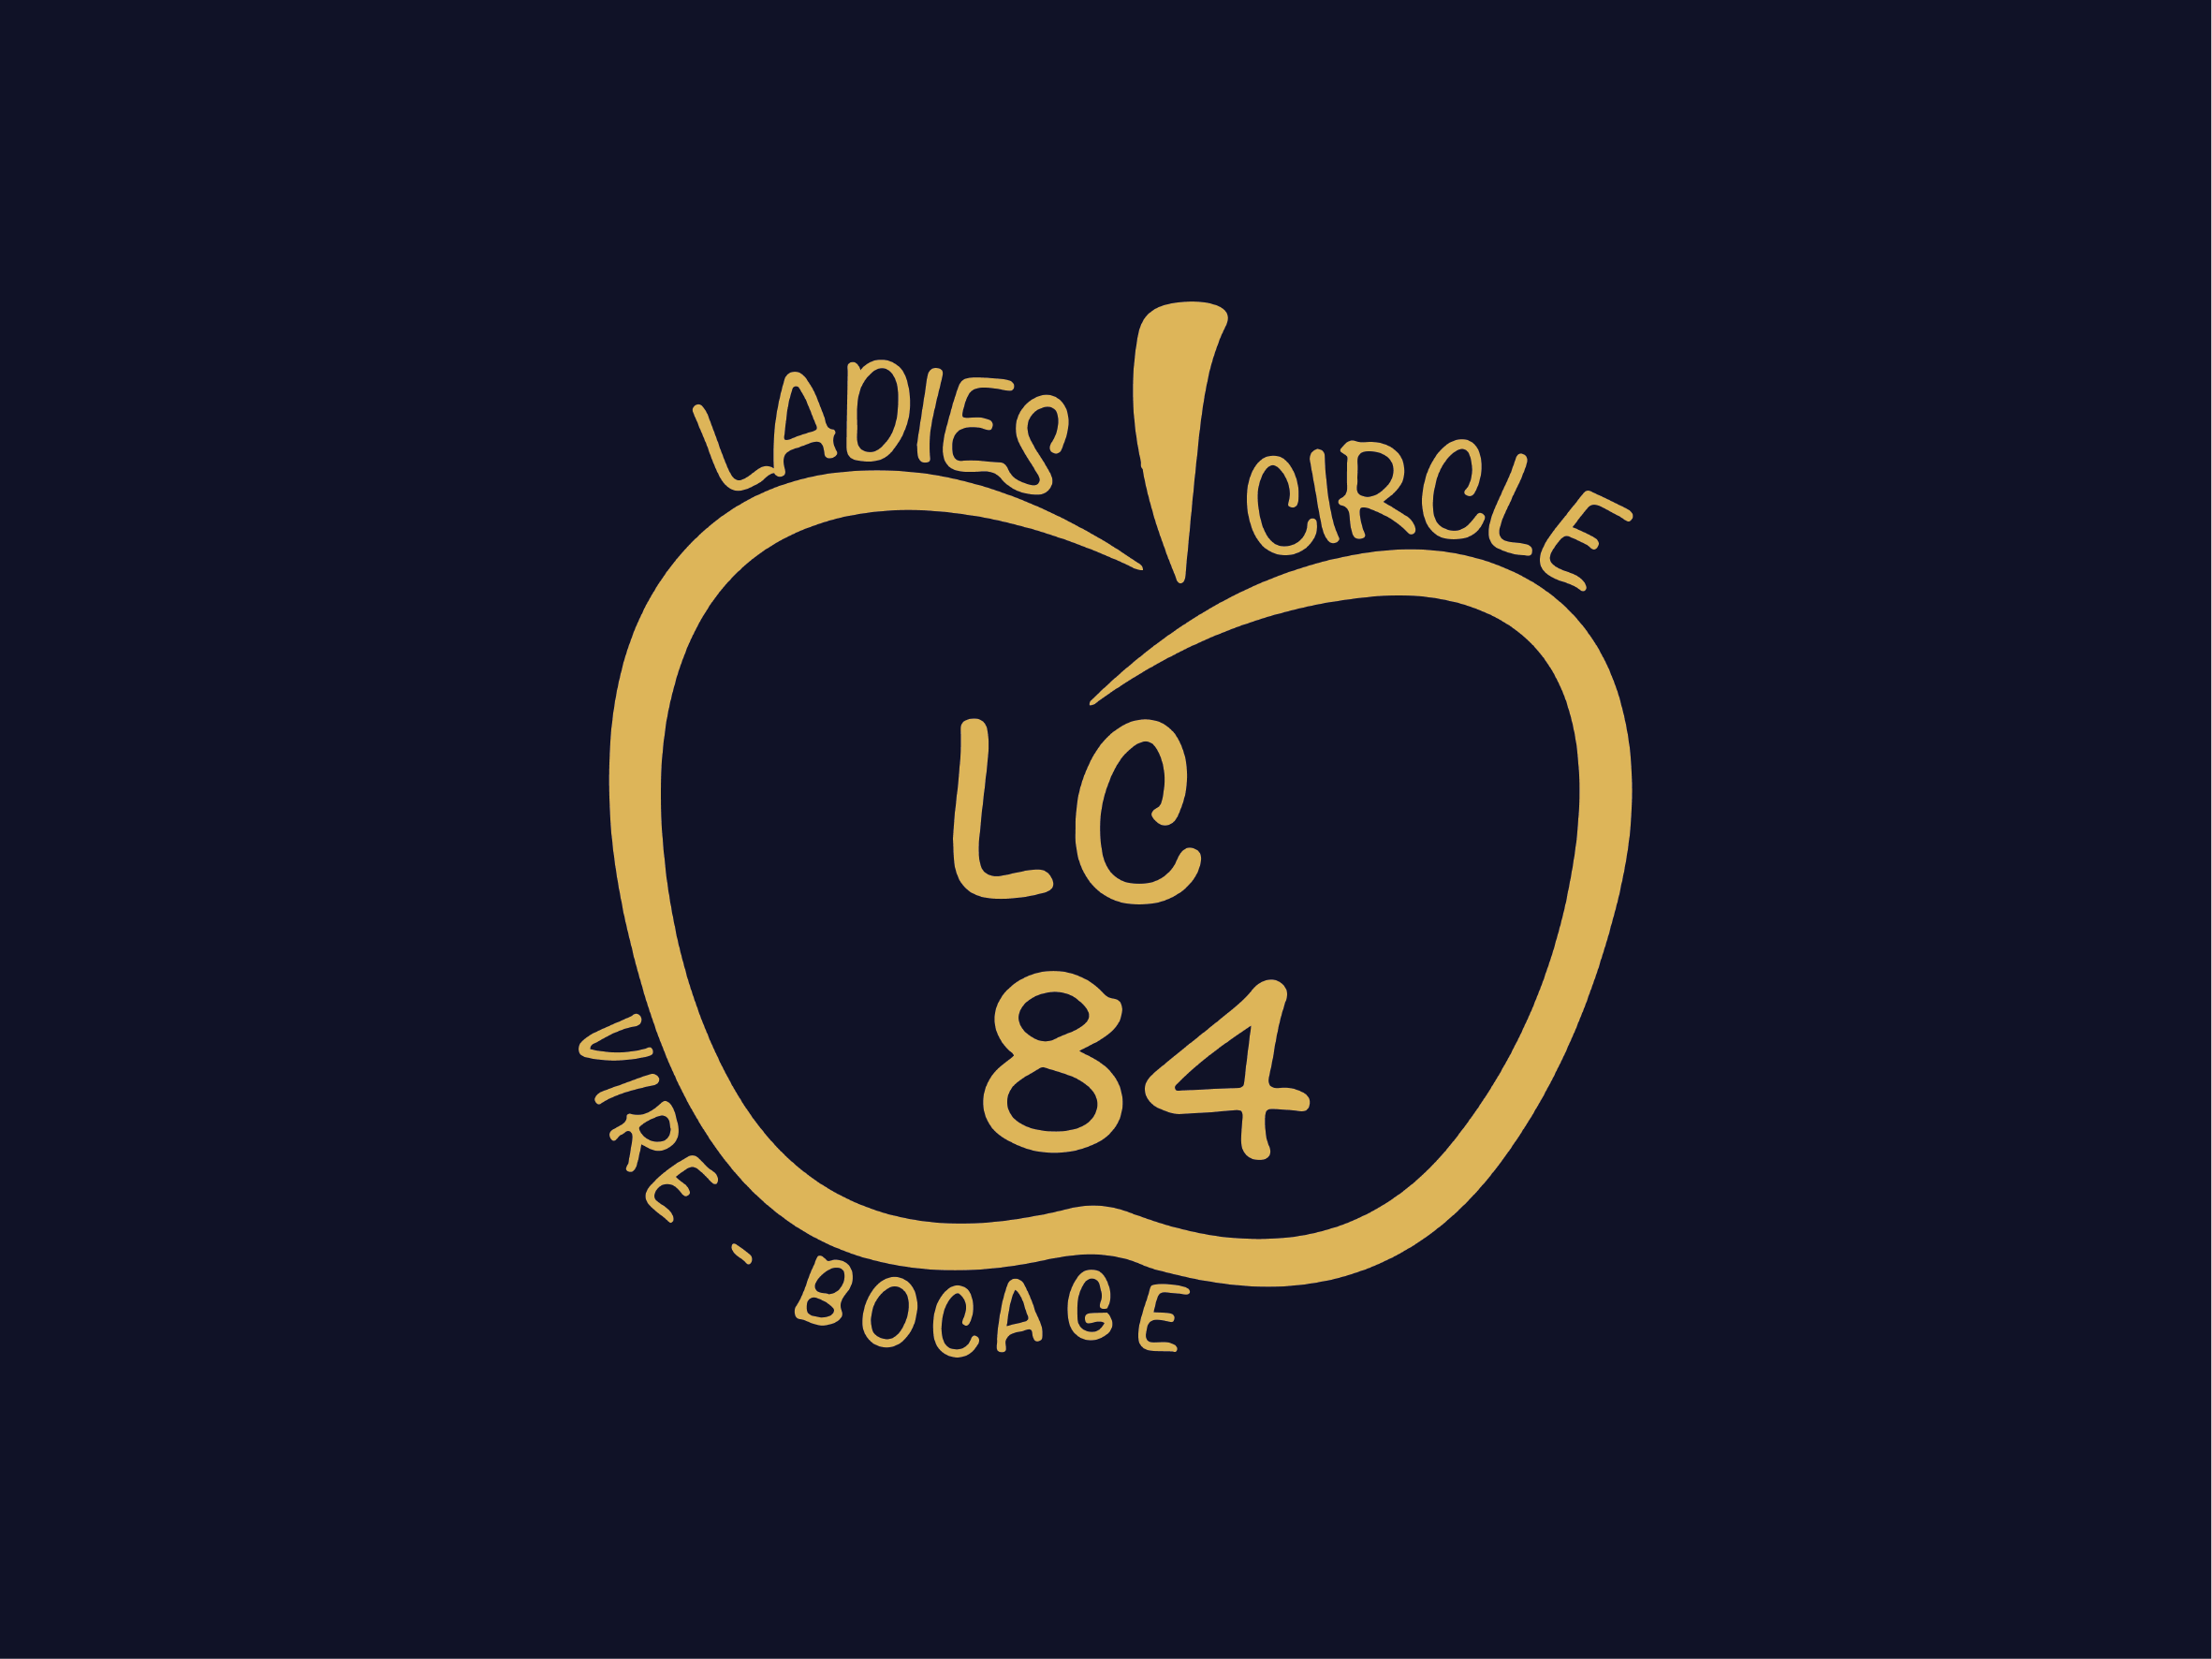 Ladies Circle Vire Bocage